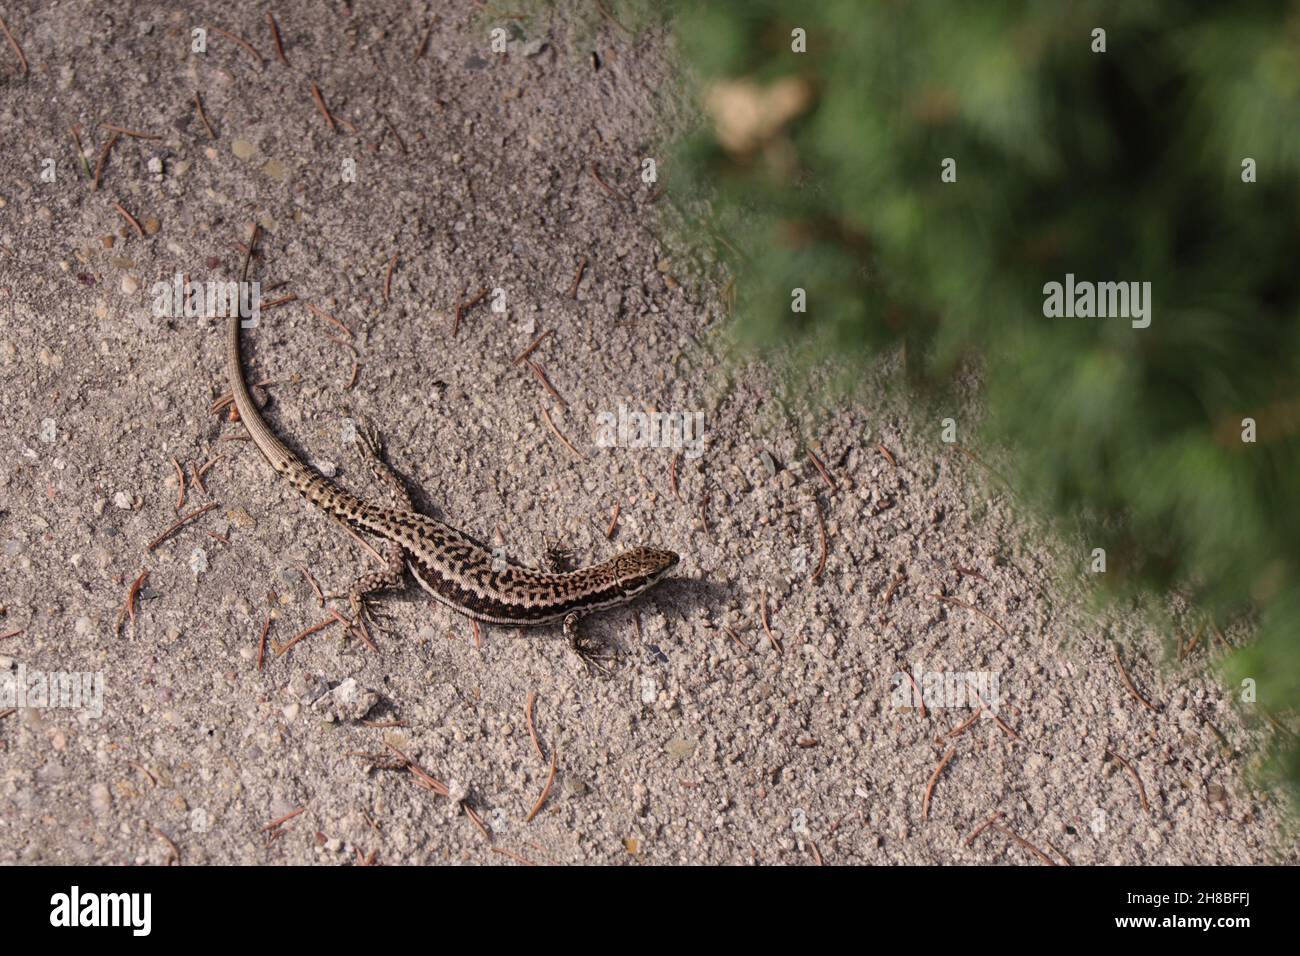 Balkan wall lizard outside on a grey flooring Stock Photo